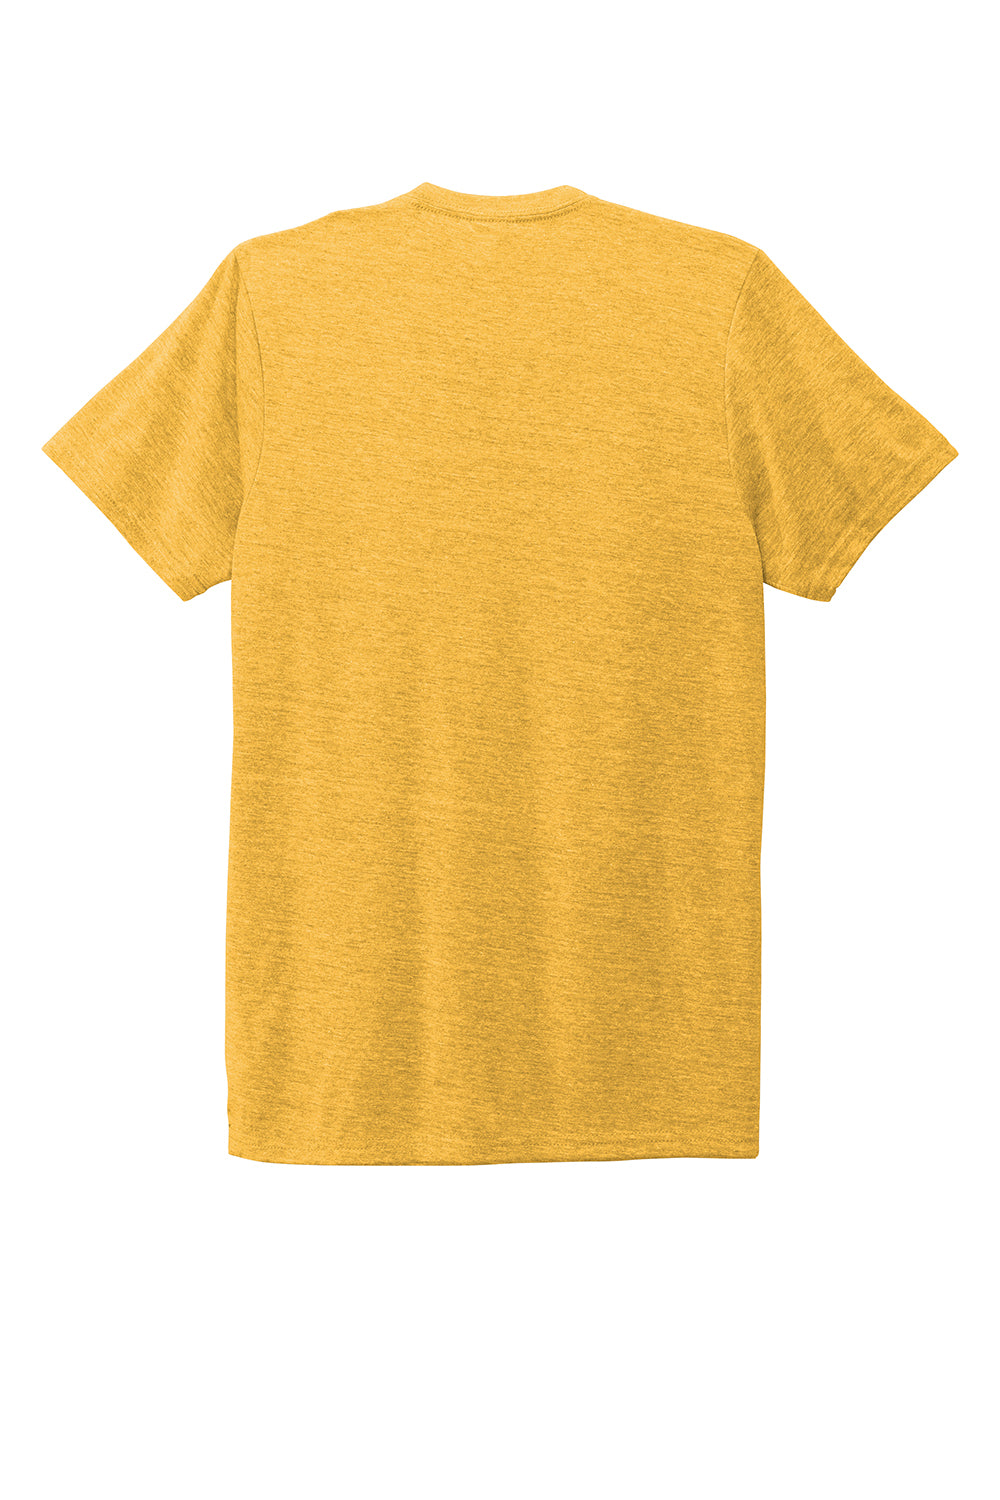 Allmade AL2004 Mens Short Sleeve Crewneck T-Shirt Suncatcher Gold Flat Back